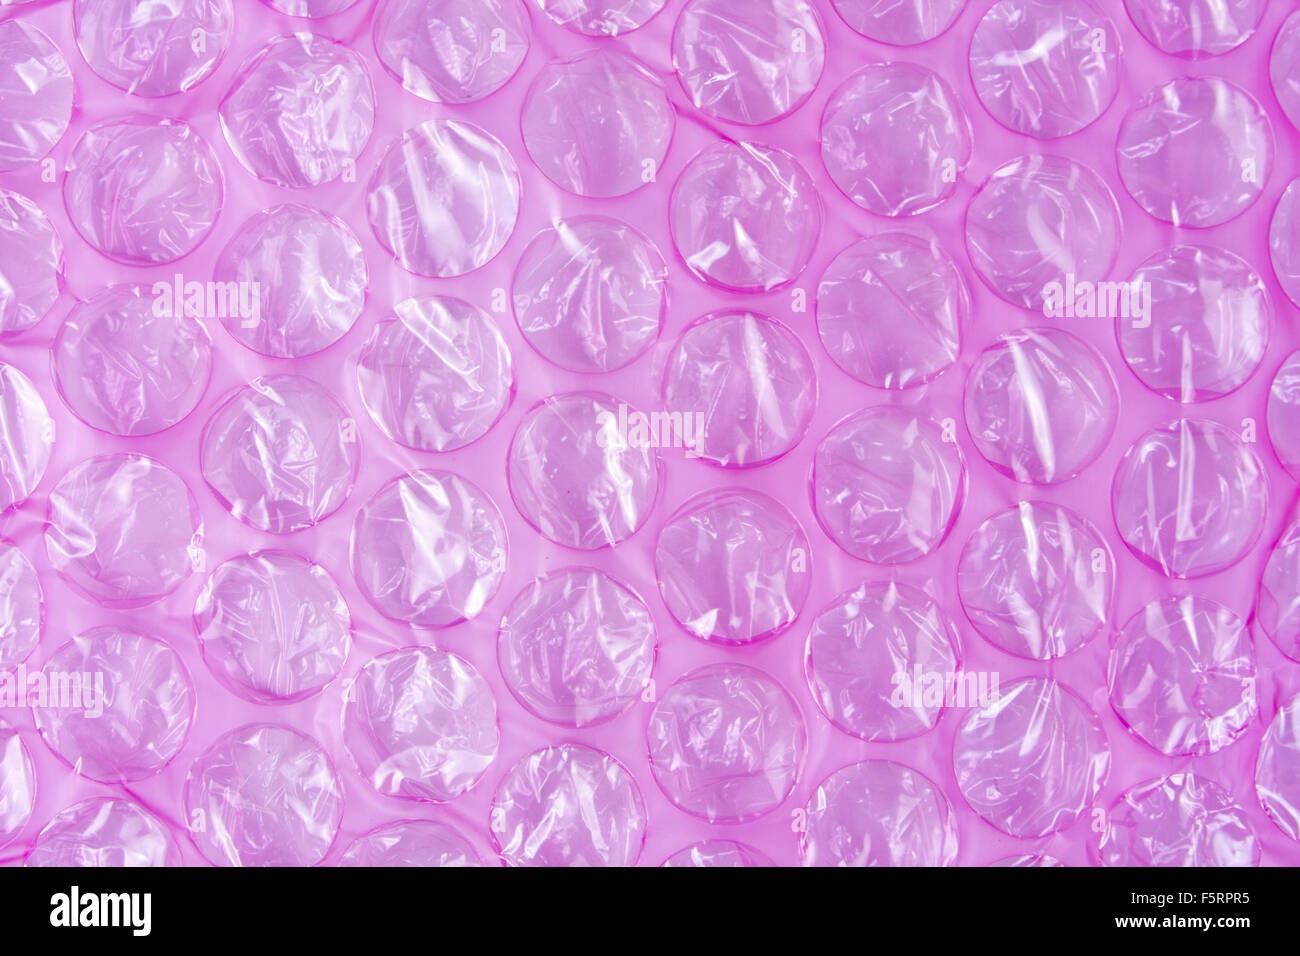 Pink plastic protective bubble wrap background Stock Photo - Alamy